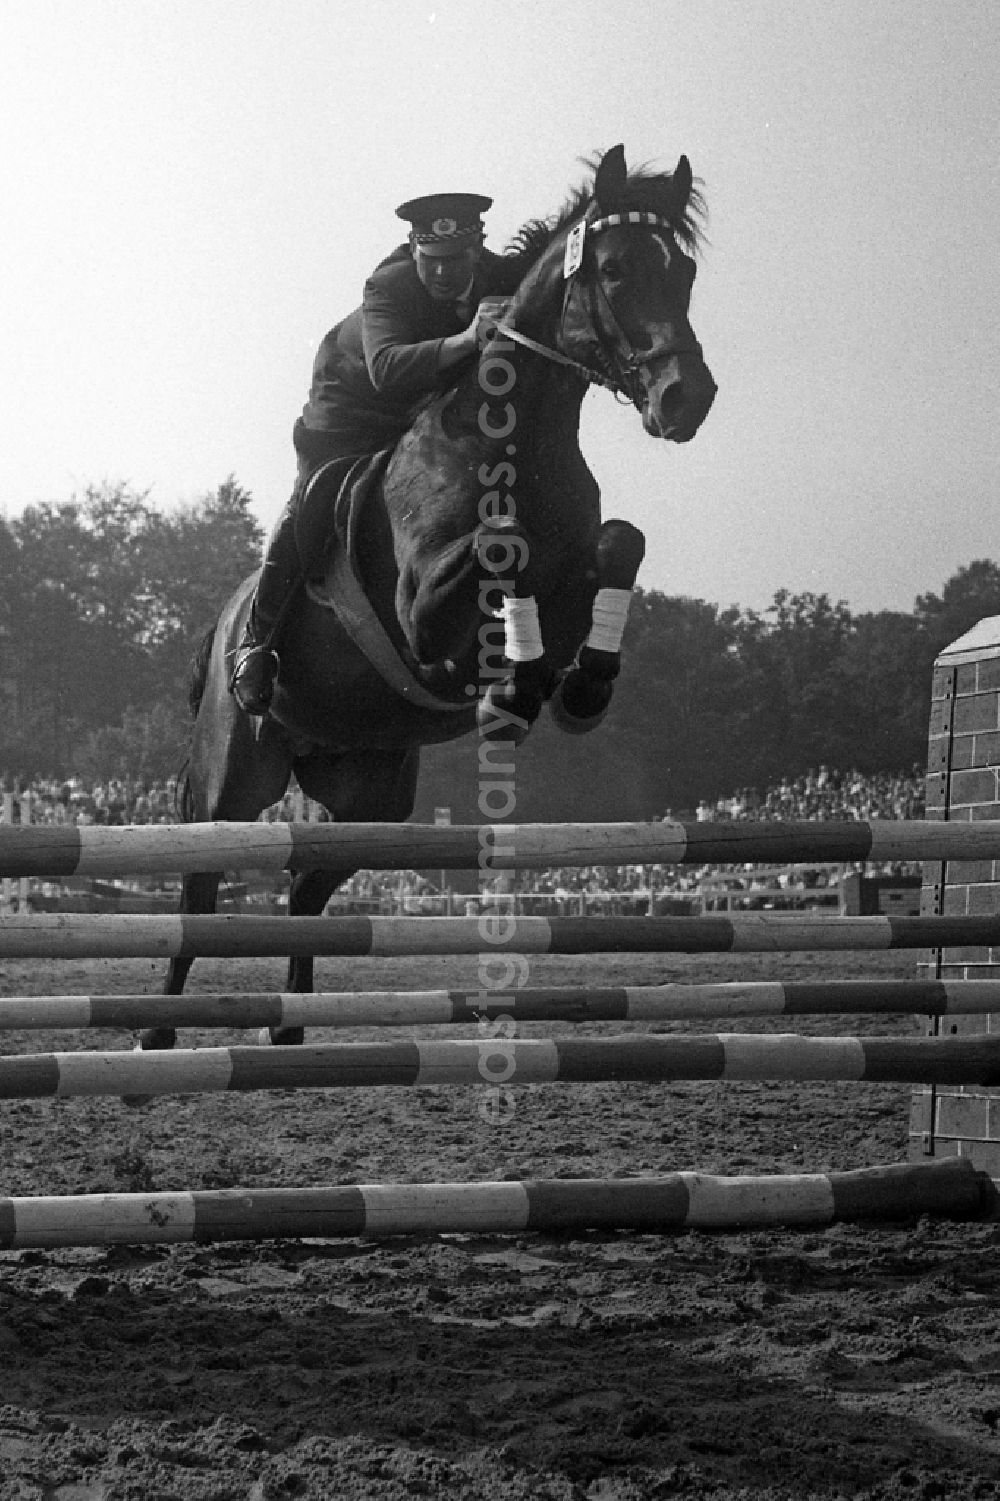 GDR photo archive: Dresden - Moritzburg Stallion Parade / VE Stallion Depot Moritzburg in the state Saxony on the territory of the former GDR, German Democratic Republic